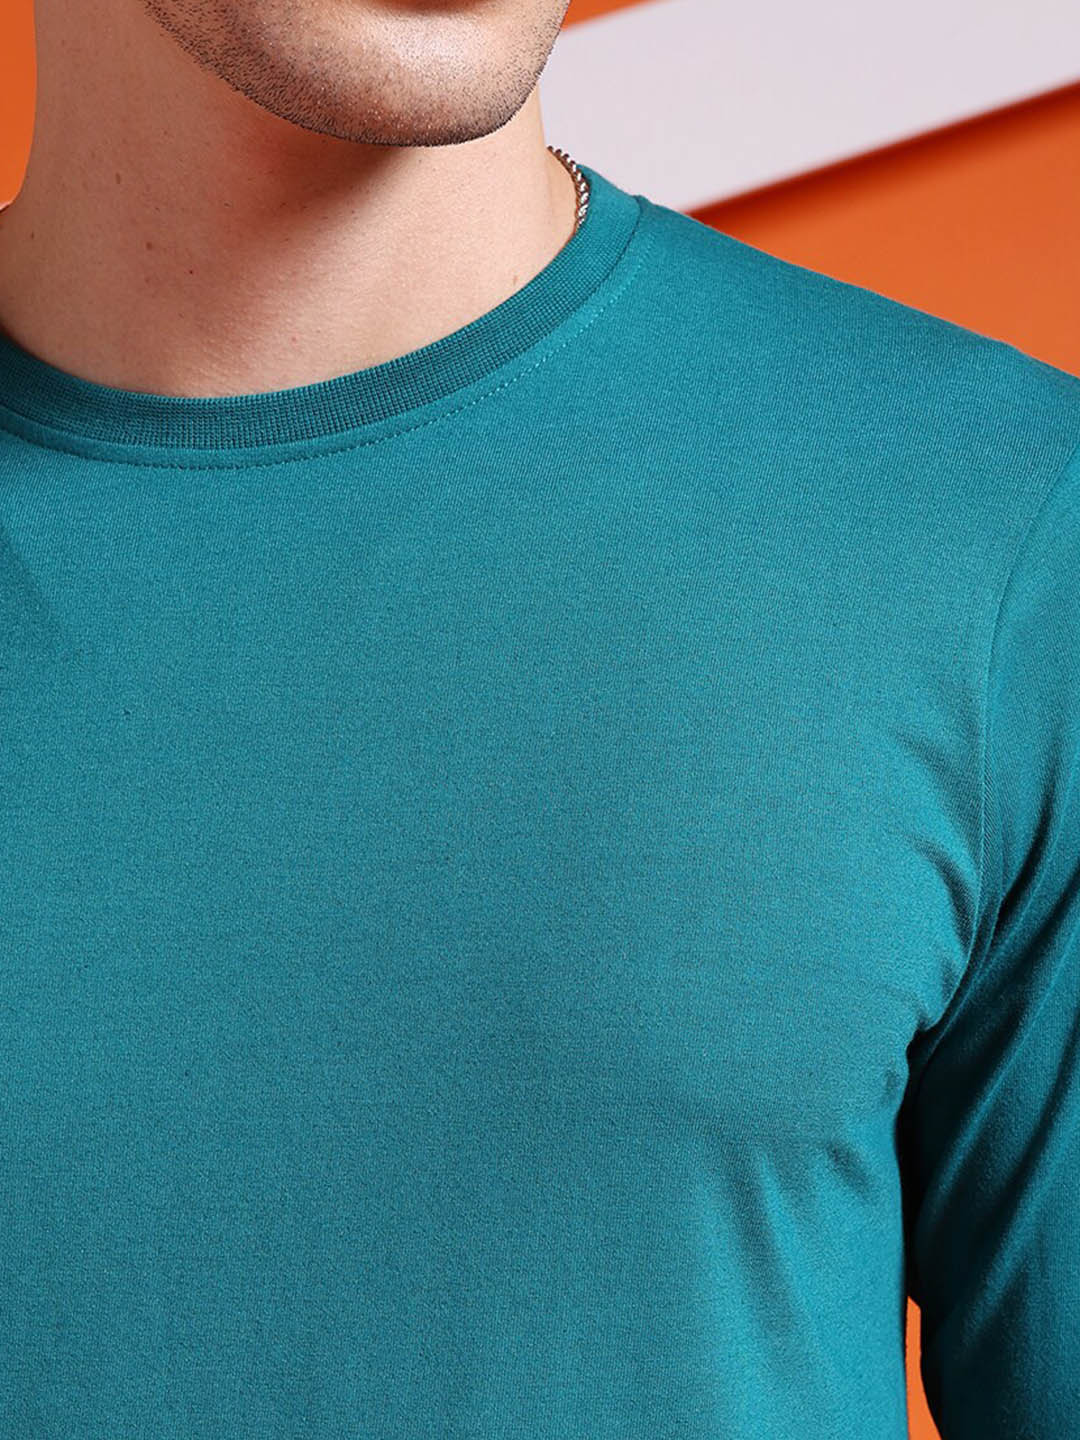 Shop Men Basic T-Shirt Online.